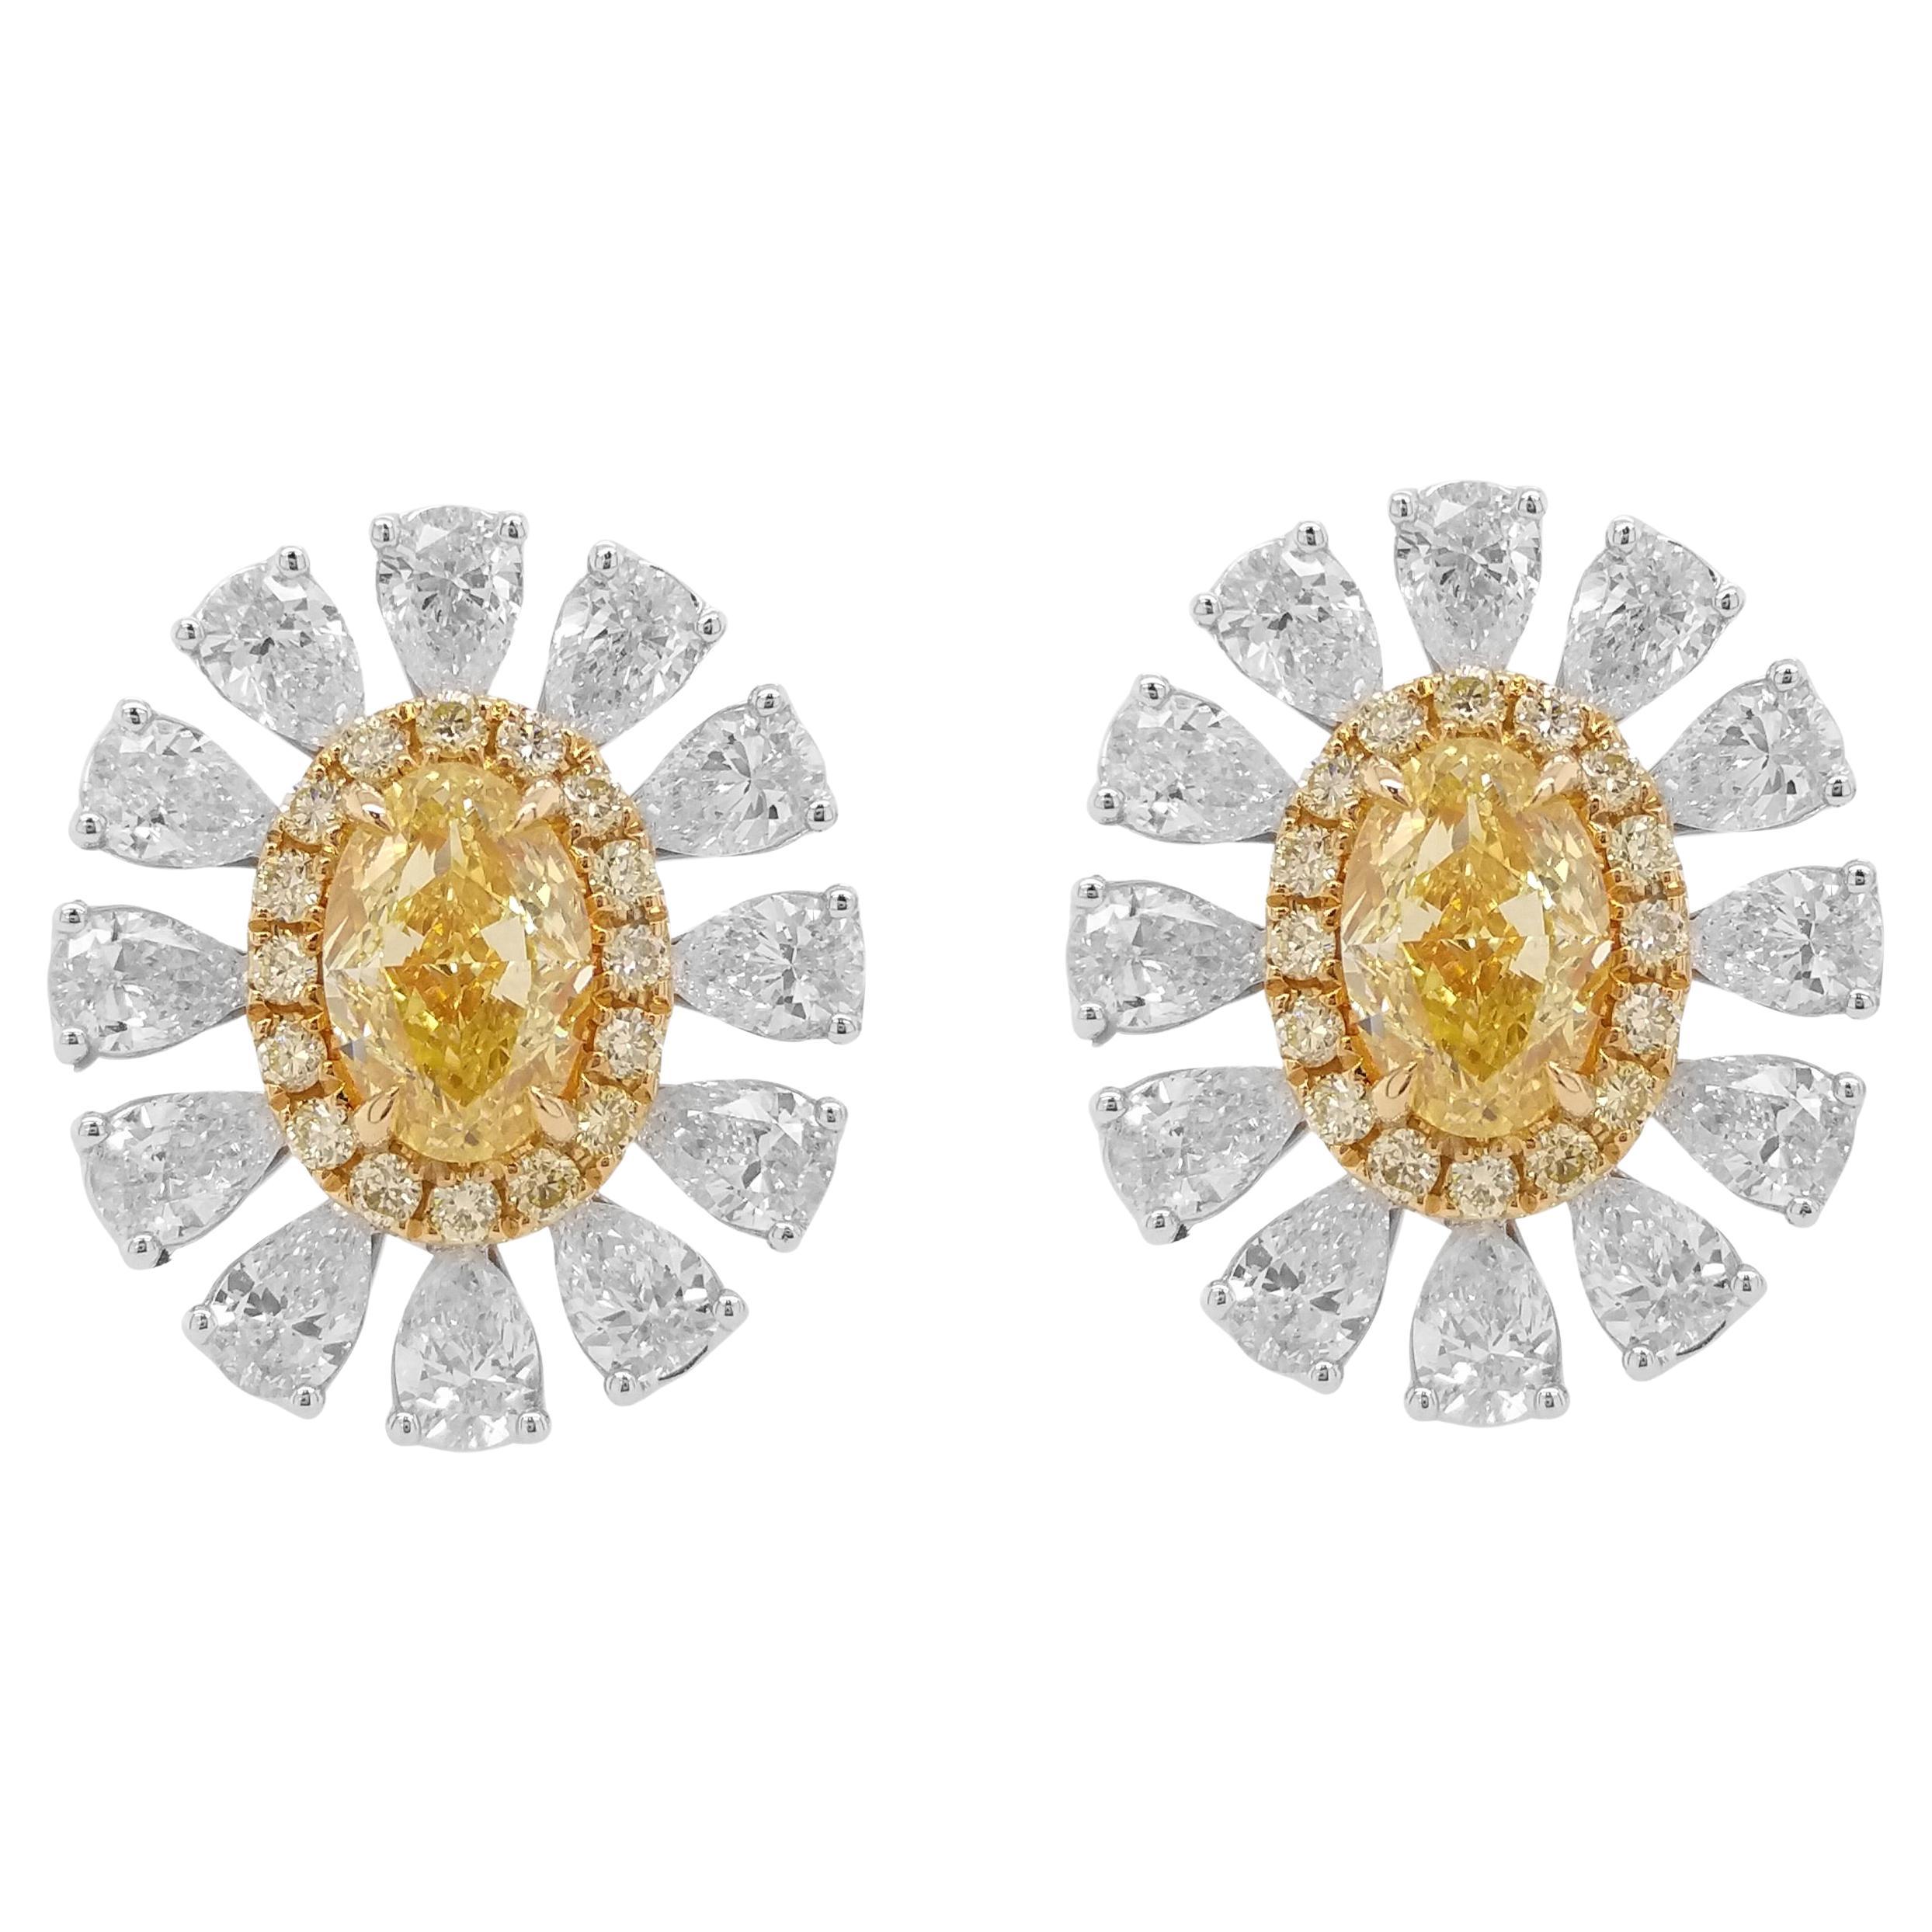 GIA Certified Yellow Diamond 18K Gold Stud Earrings